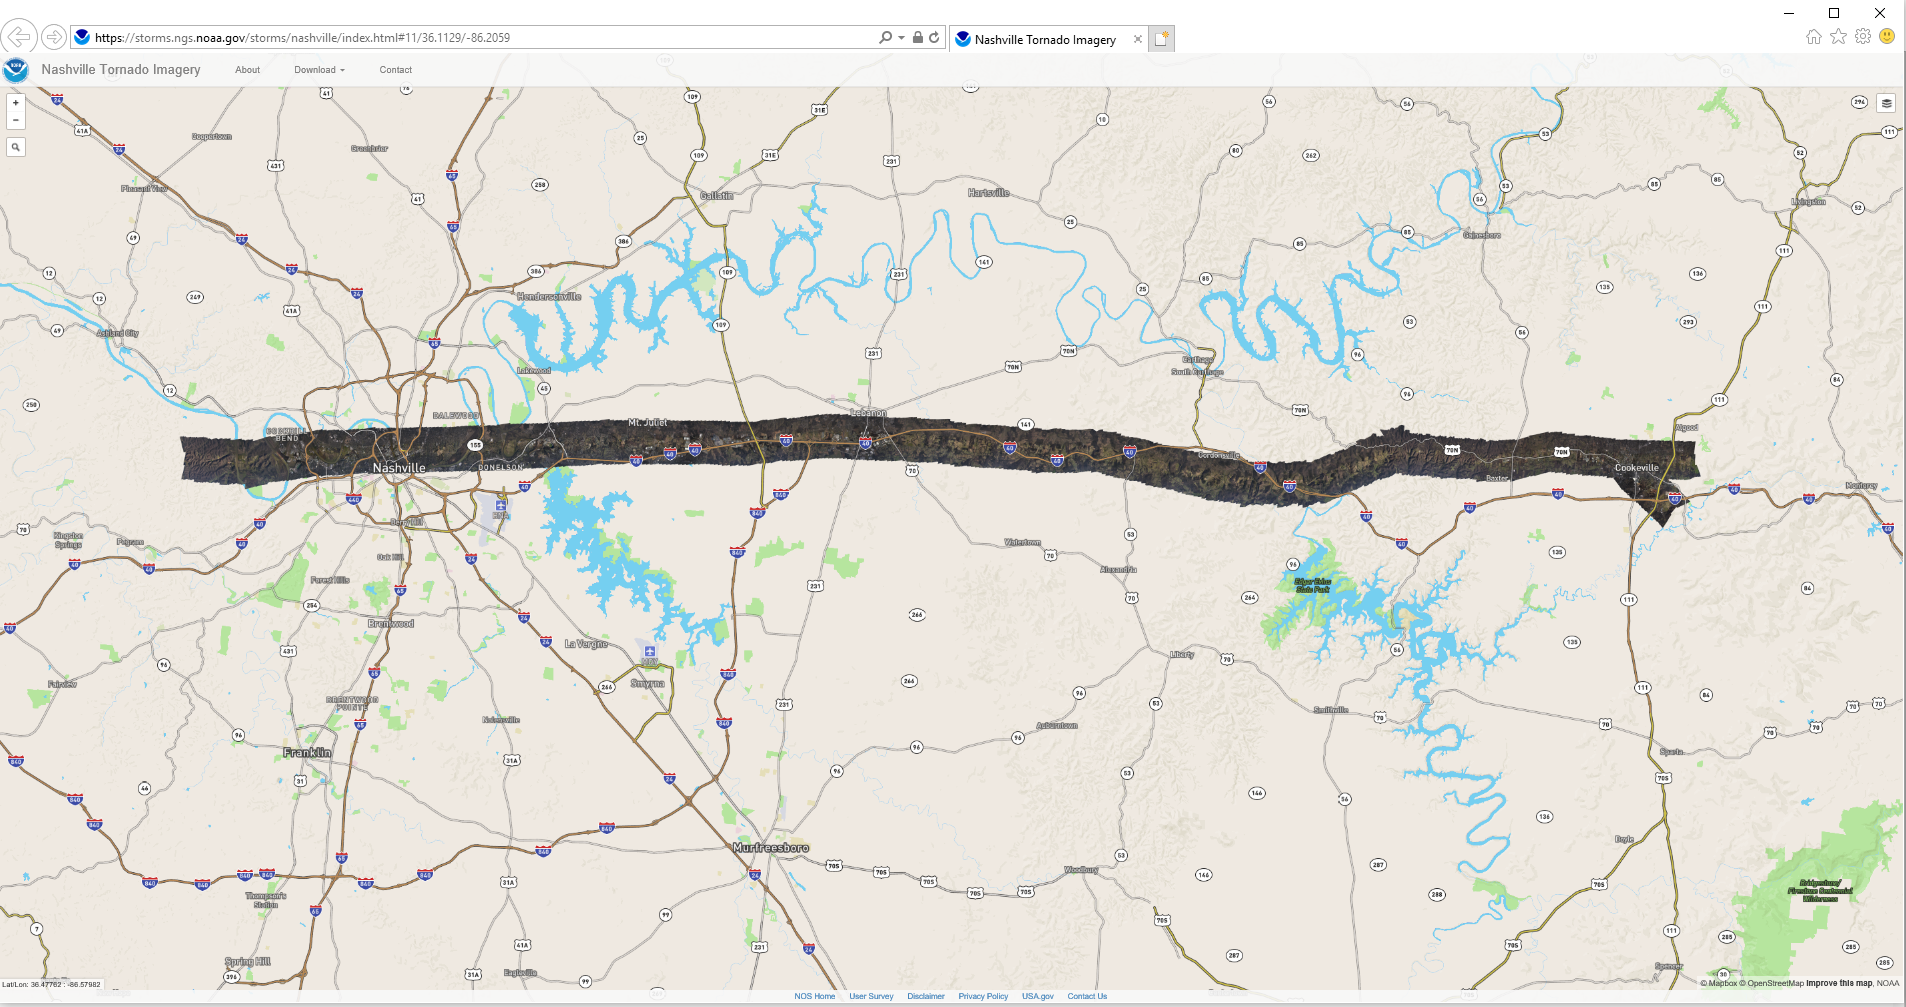 NOAA Imagery for the Nashville Tornado Response